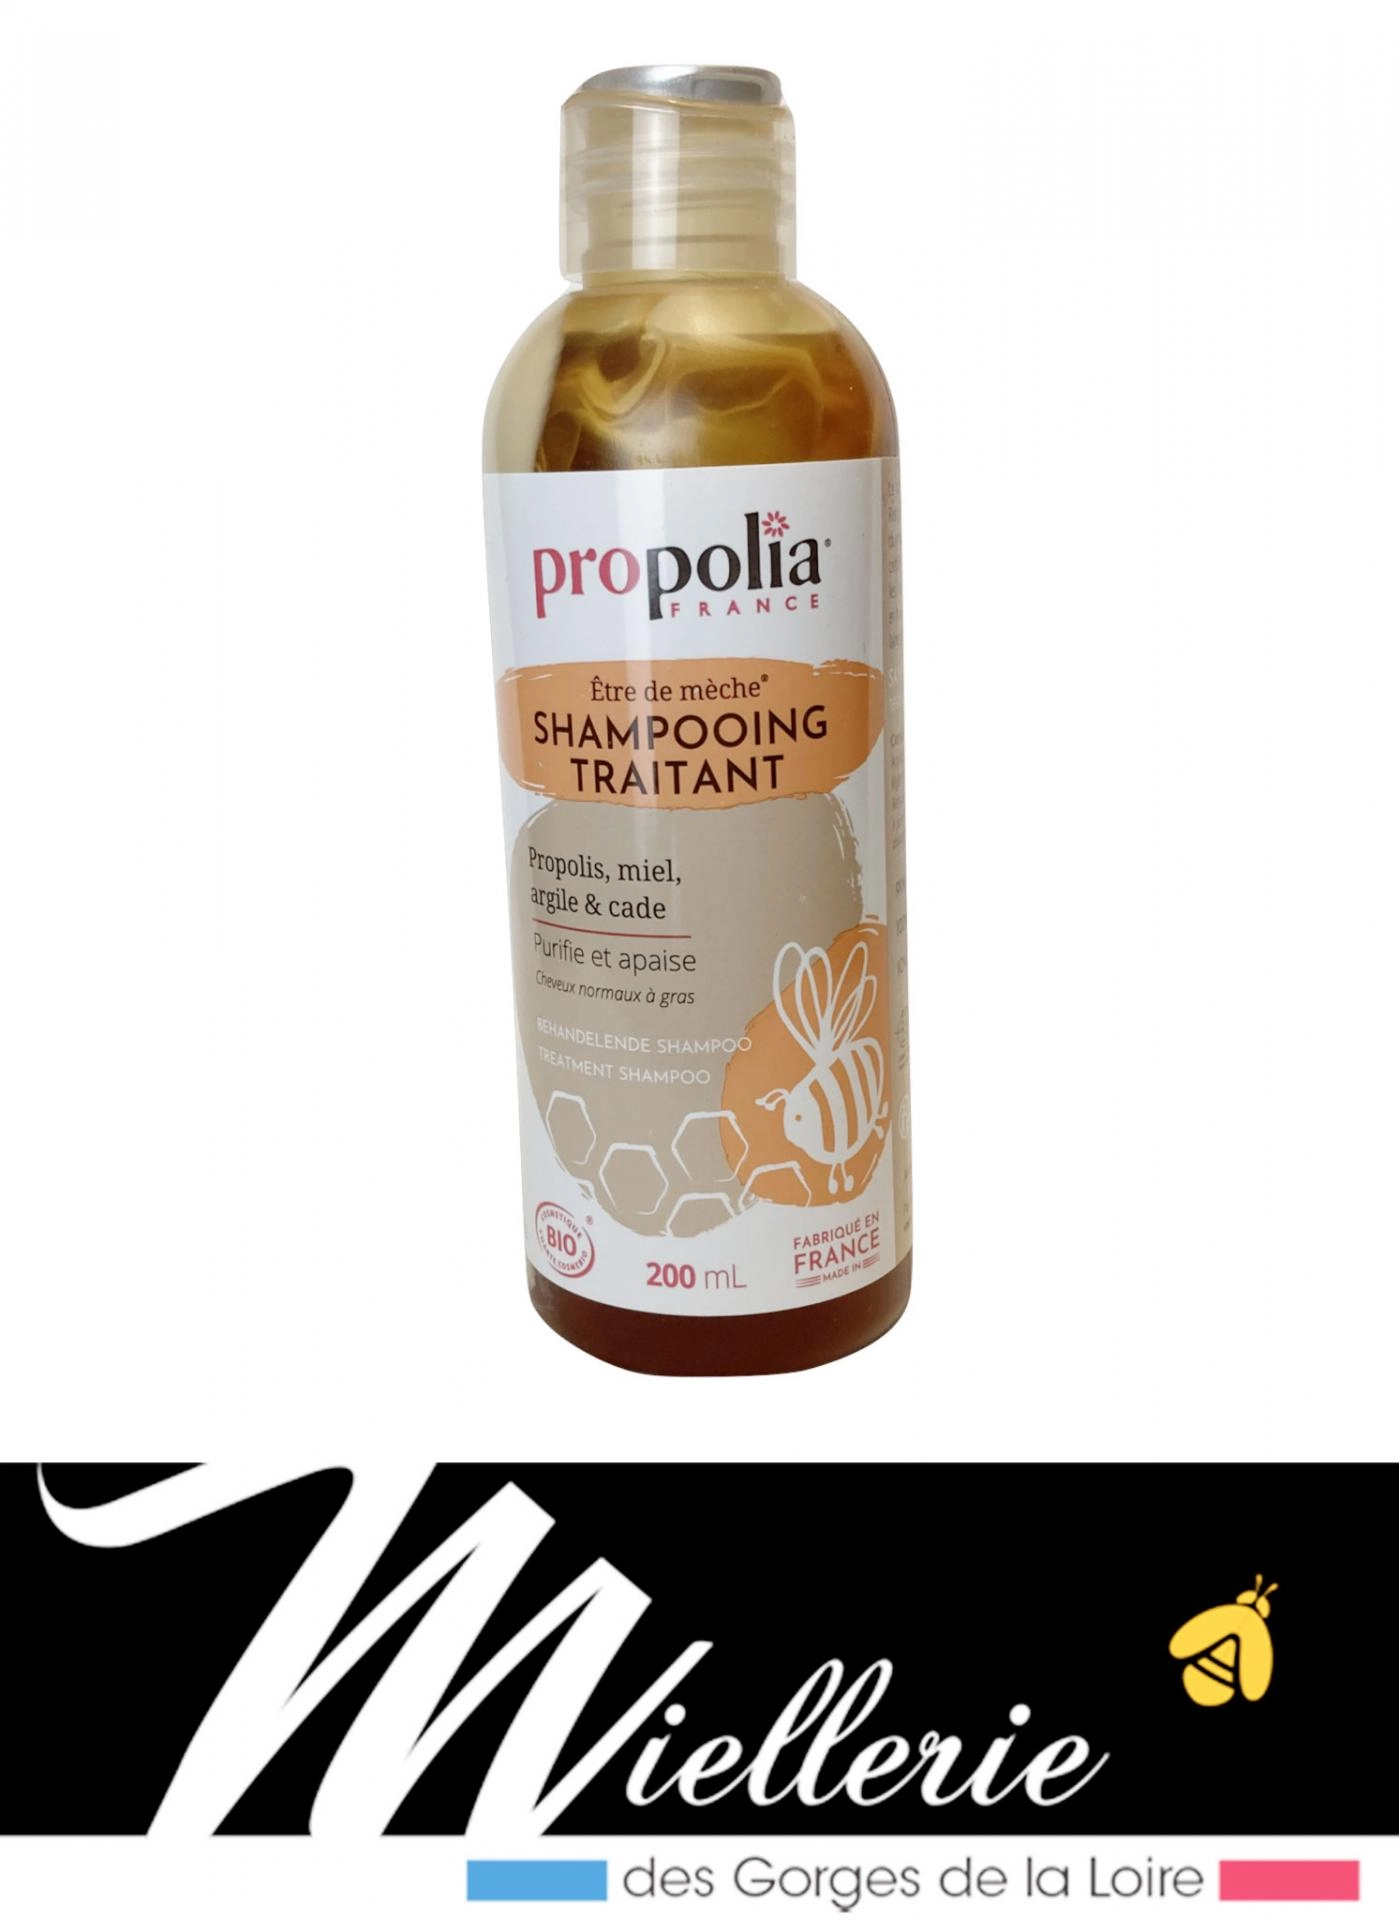 propolia-shampooing-traitant-propolis-miel-argile-cade.jpg